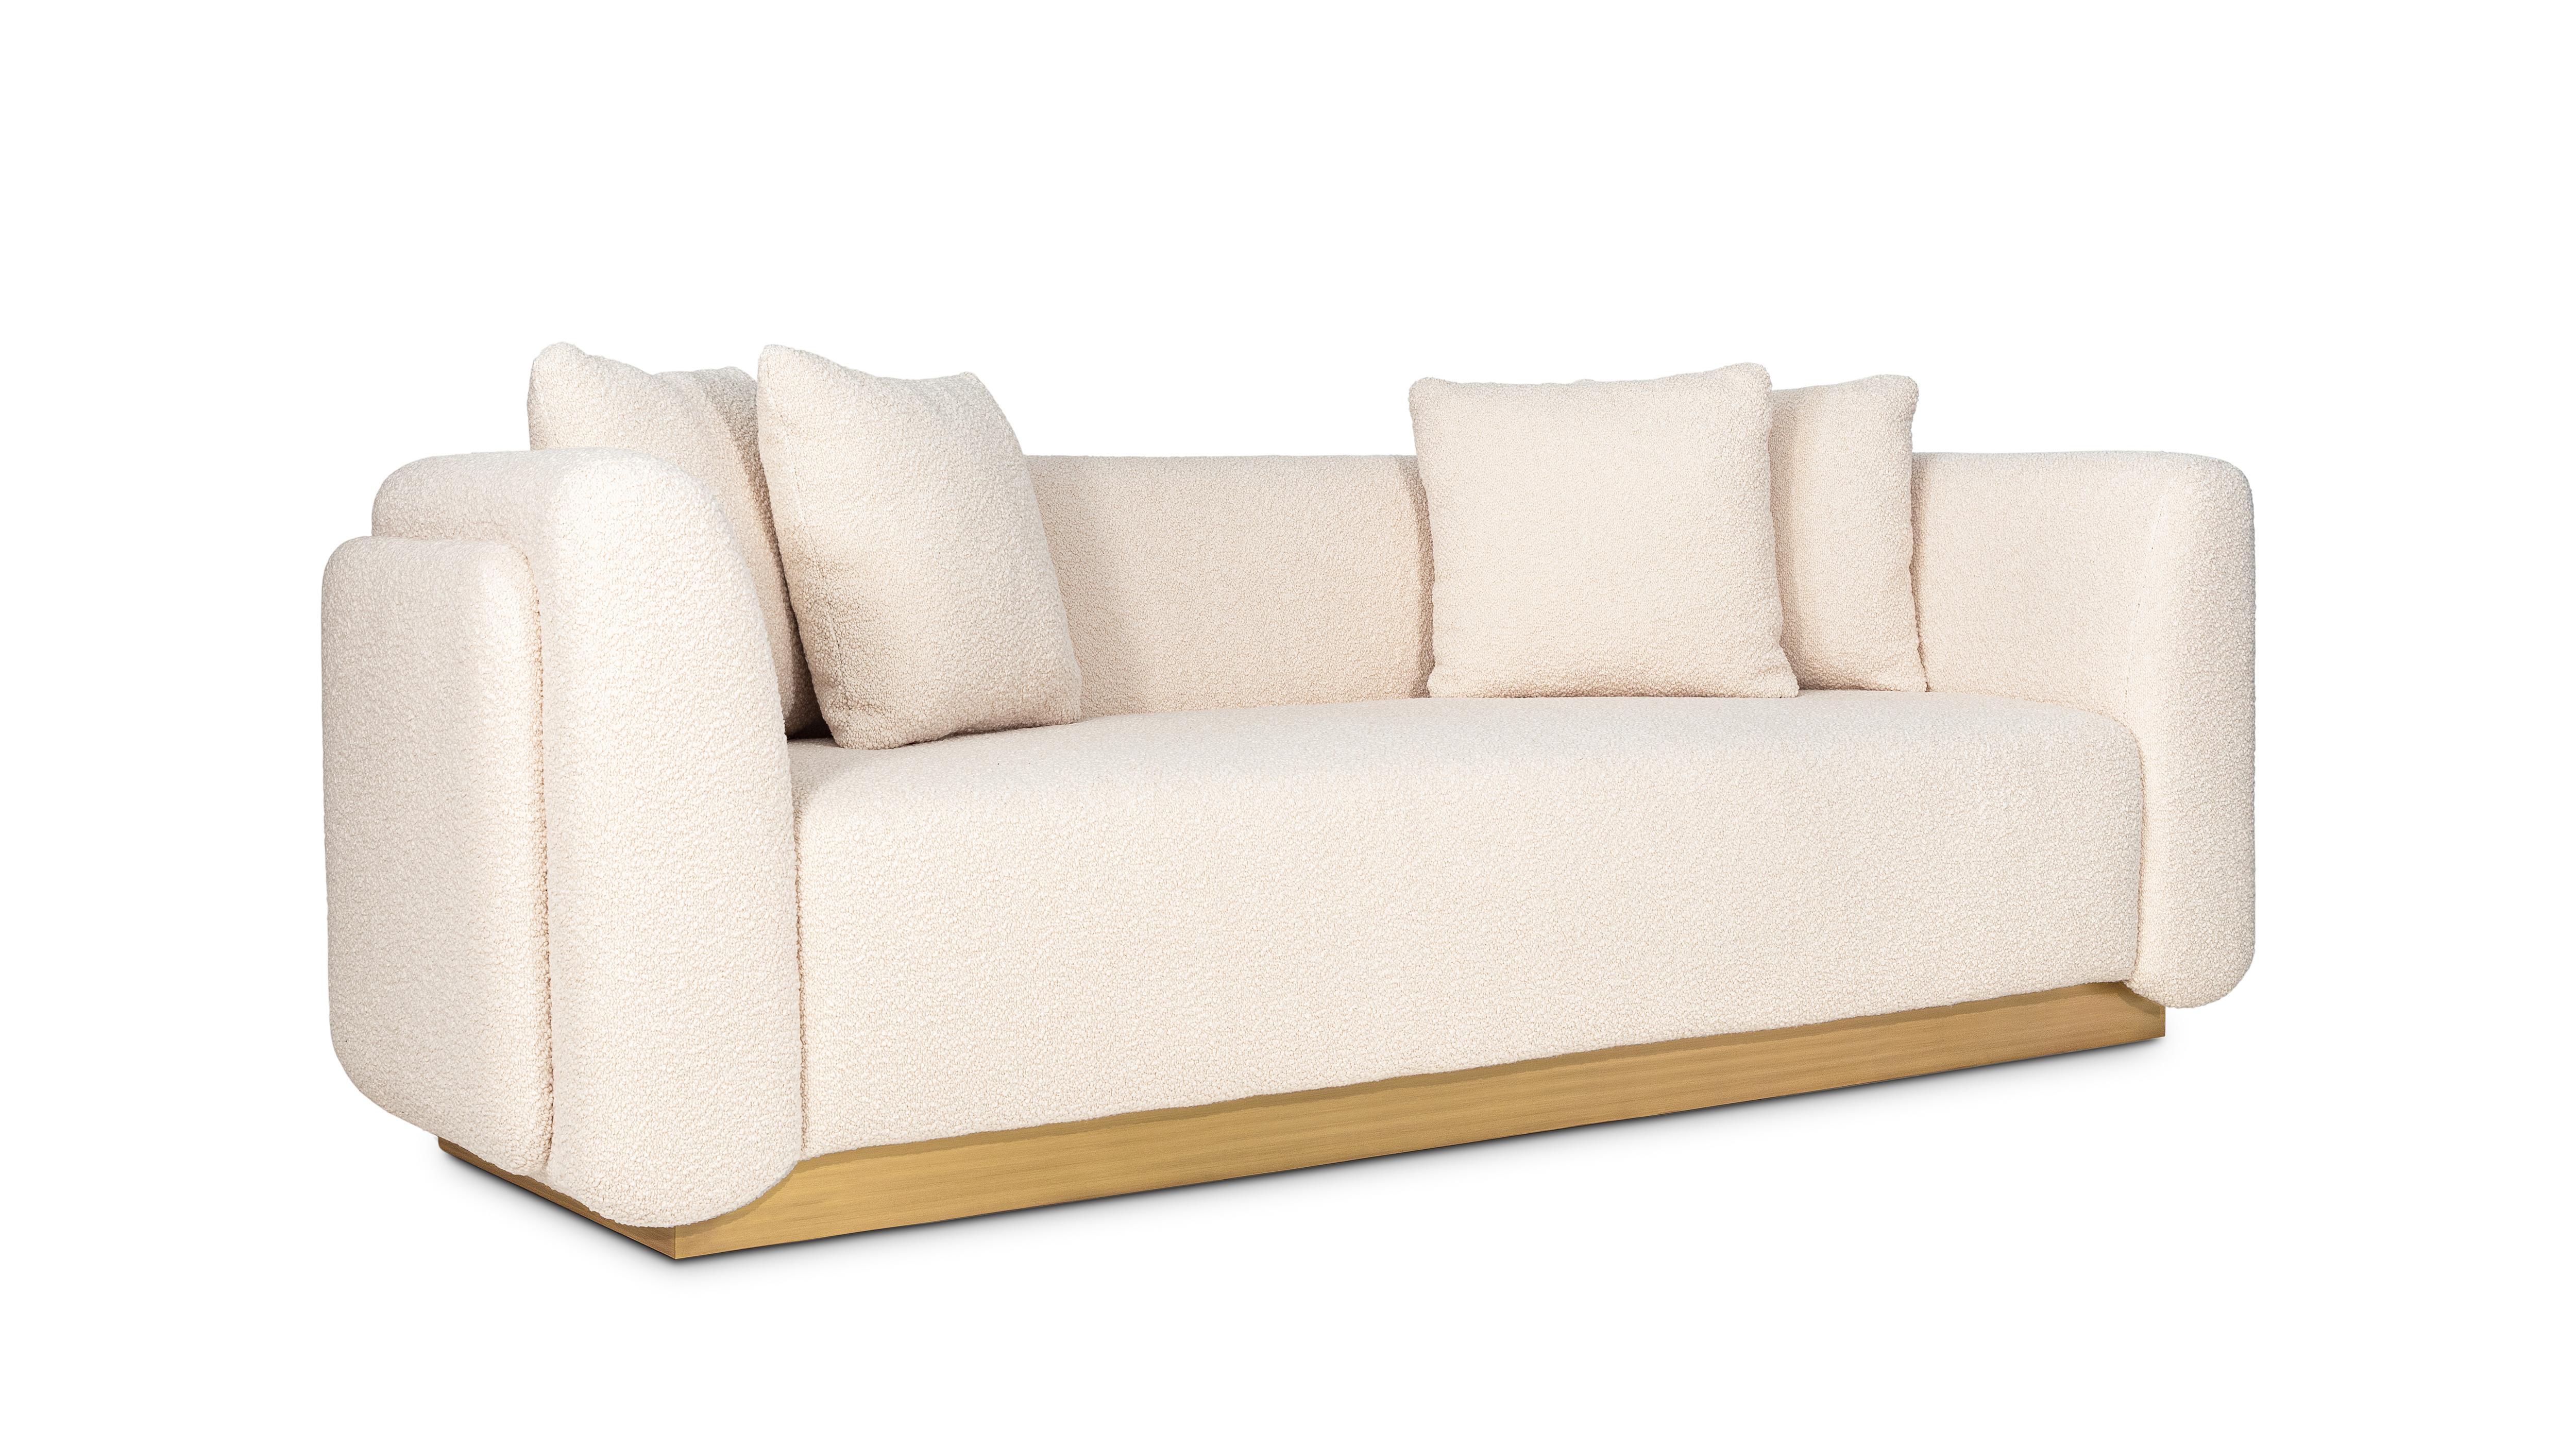 Post-Modern Foz 3 Seat Sofa by InsidherLand For Sale